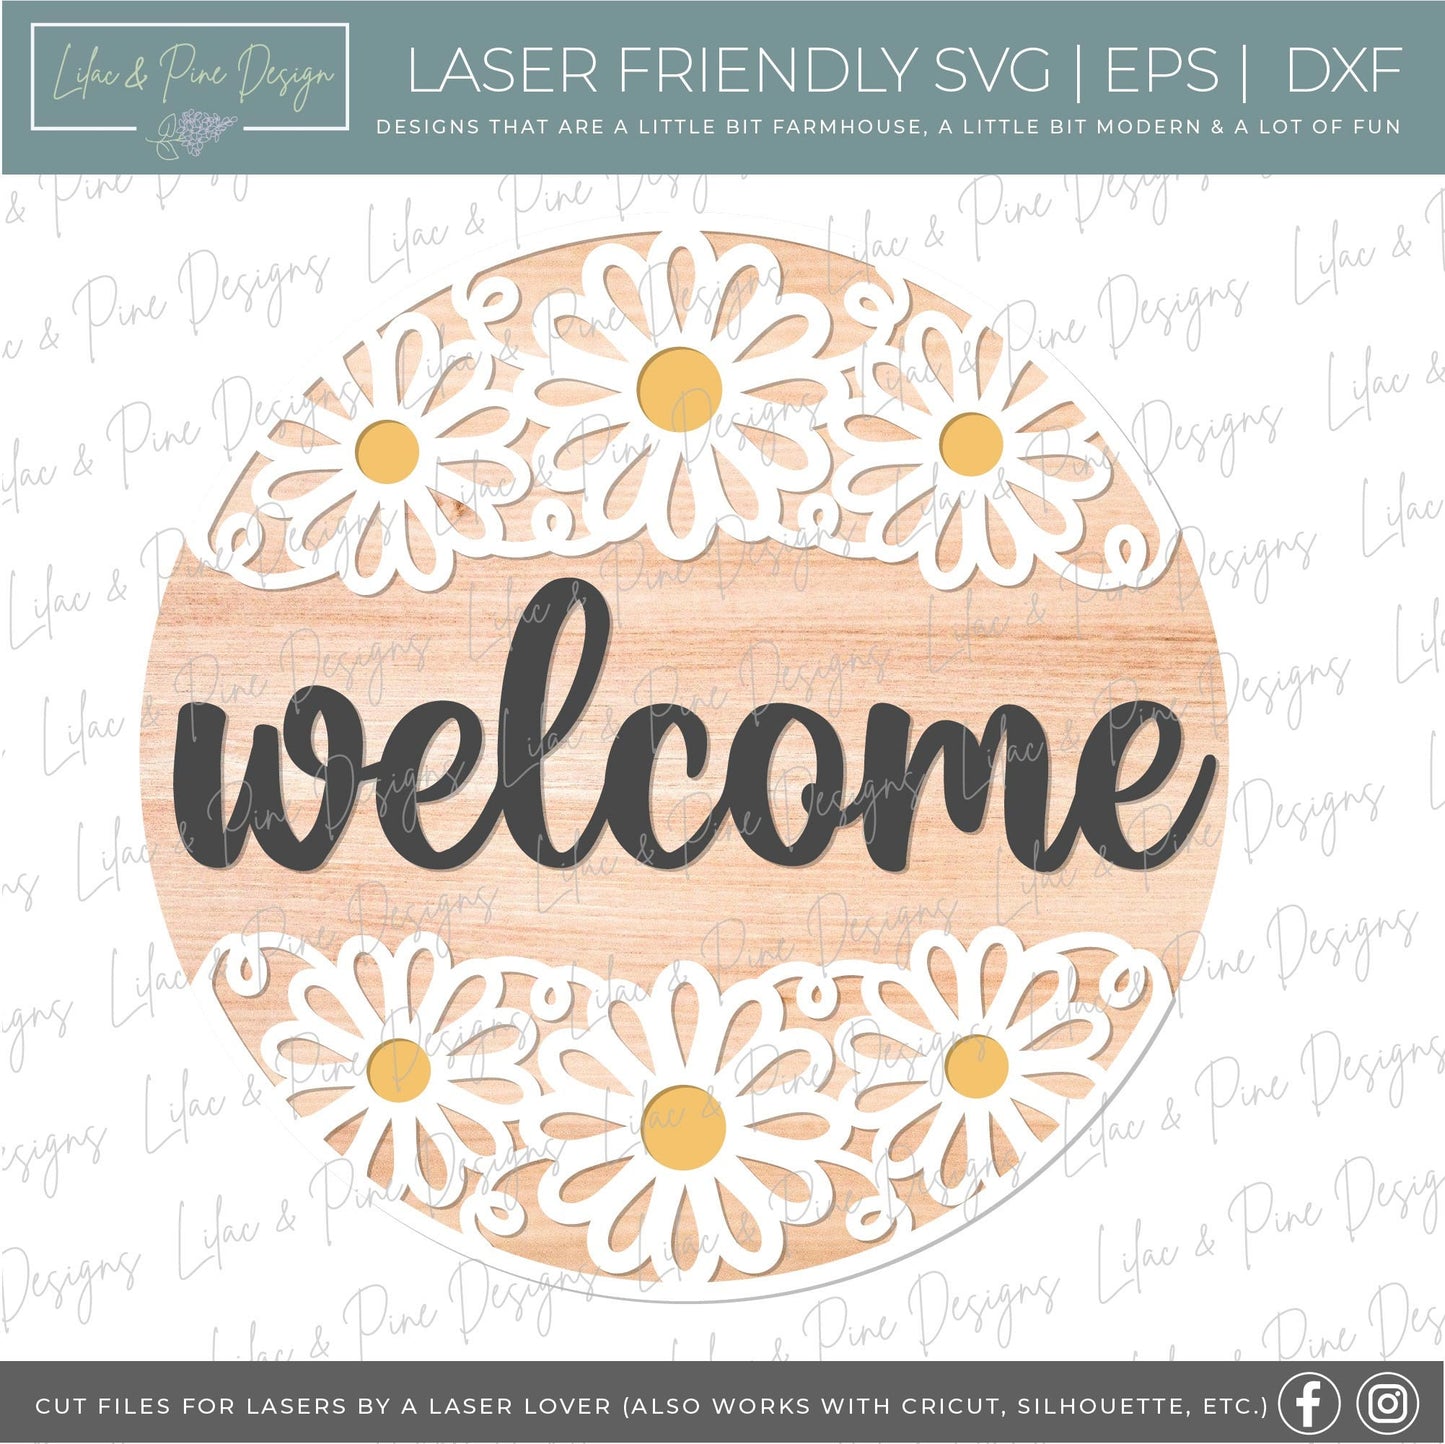 Daisy welcome sign SVG, Daisy hello, summer floral door hanger SVG, flower welcome sign, daisy porch decor, Glowforge SVG, laser cut file